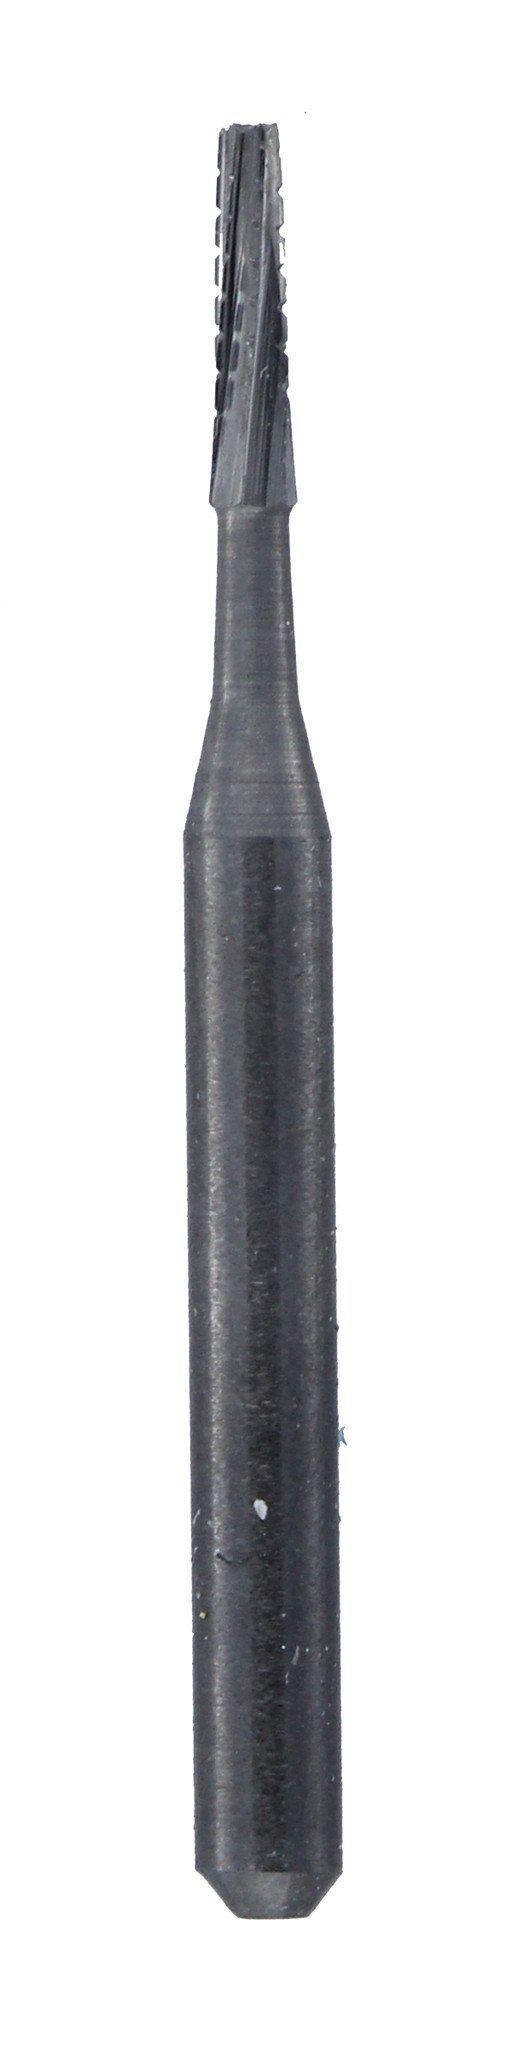 FG700-1  Dentalree Solid Carbide 1-Piece  Made in USA